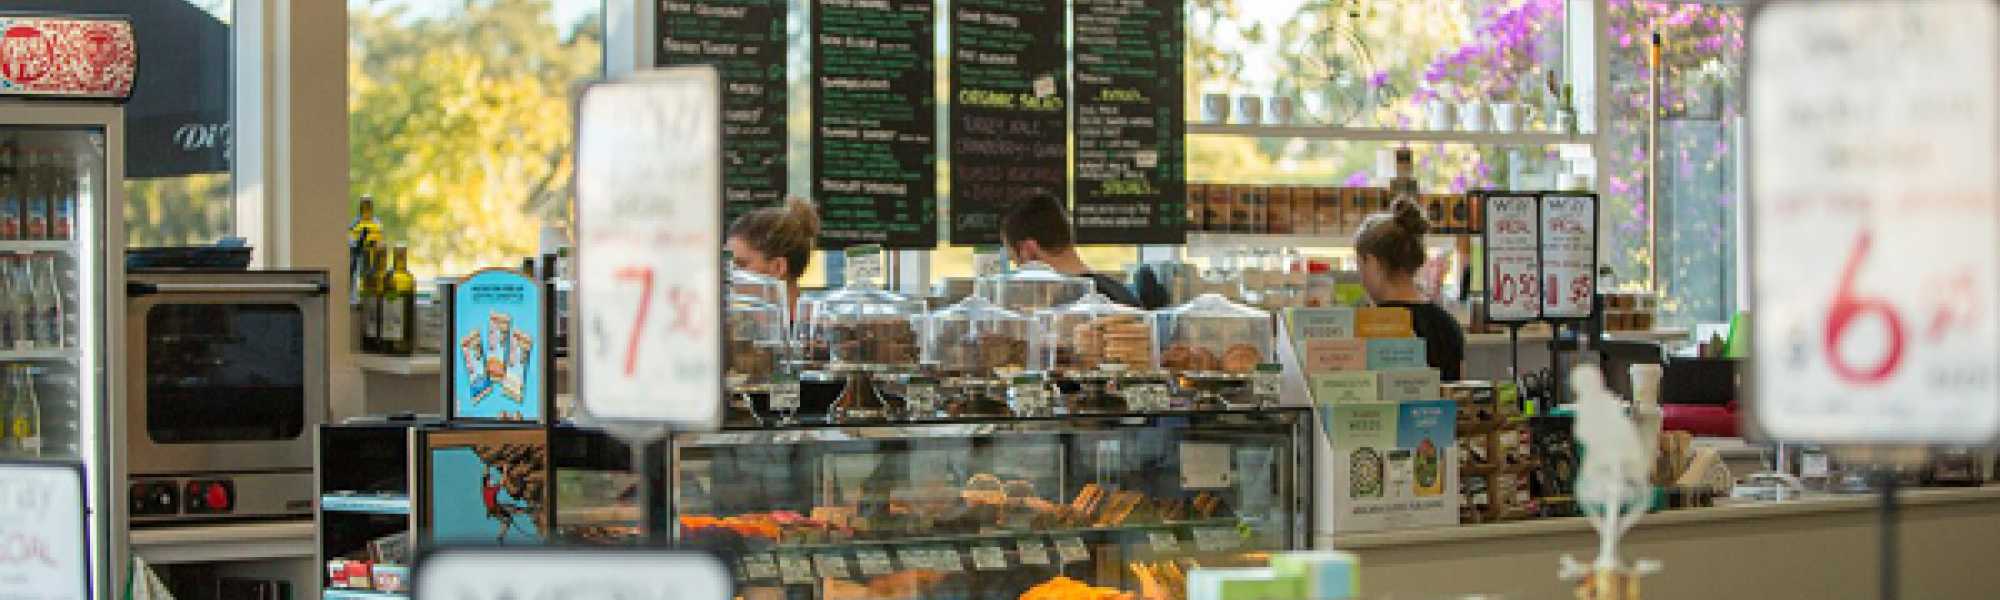 Wray Organic Market and Cafe - Cleveland